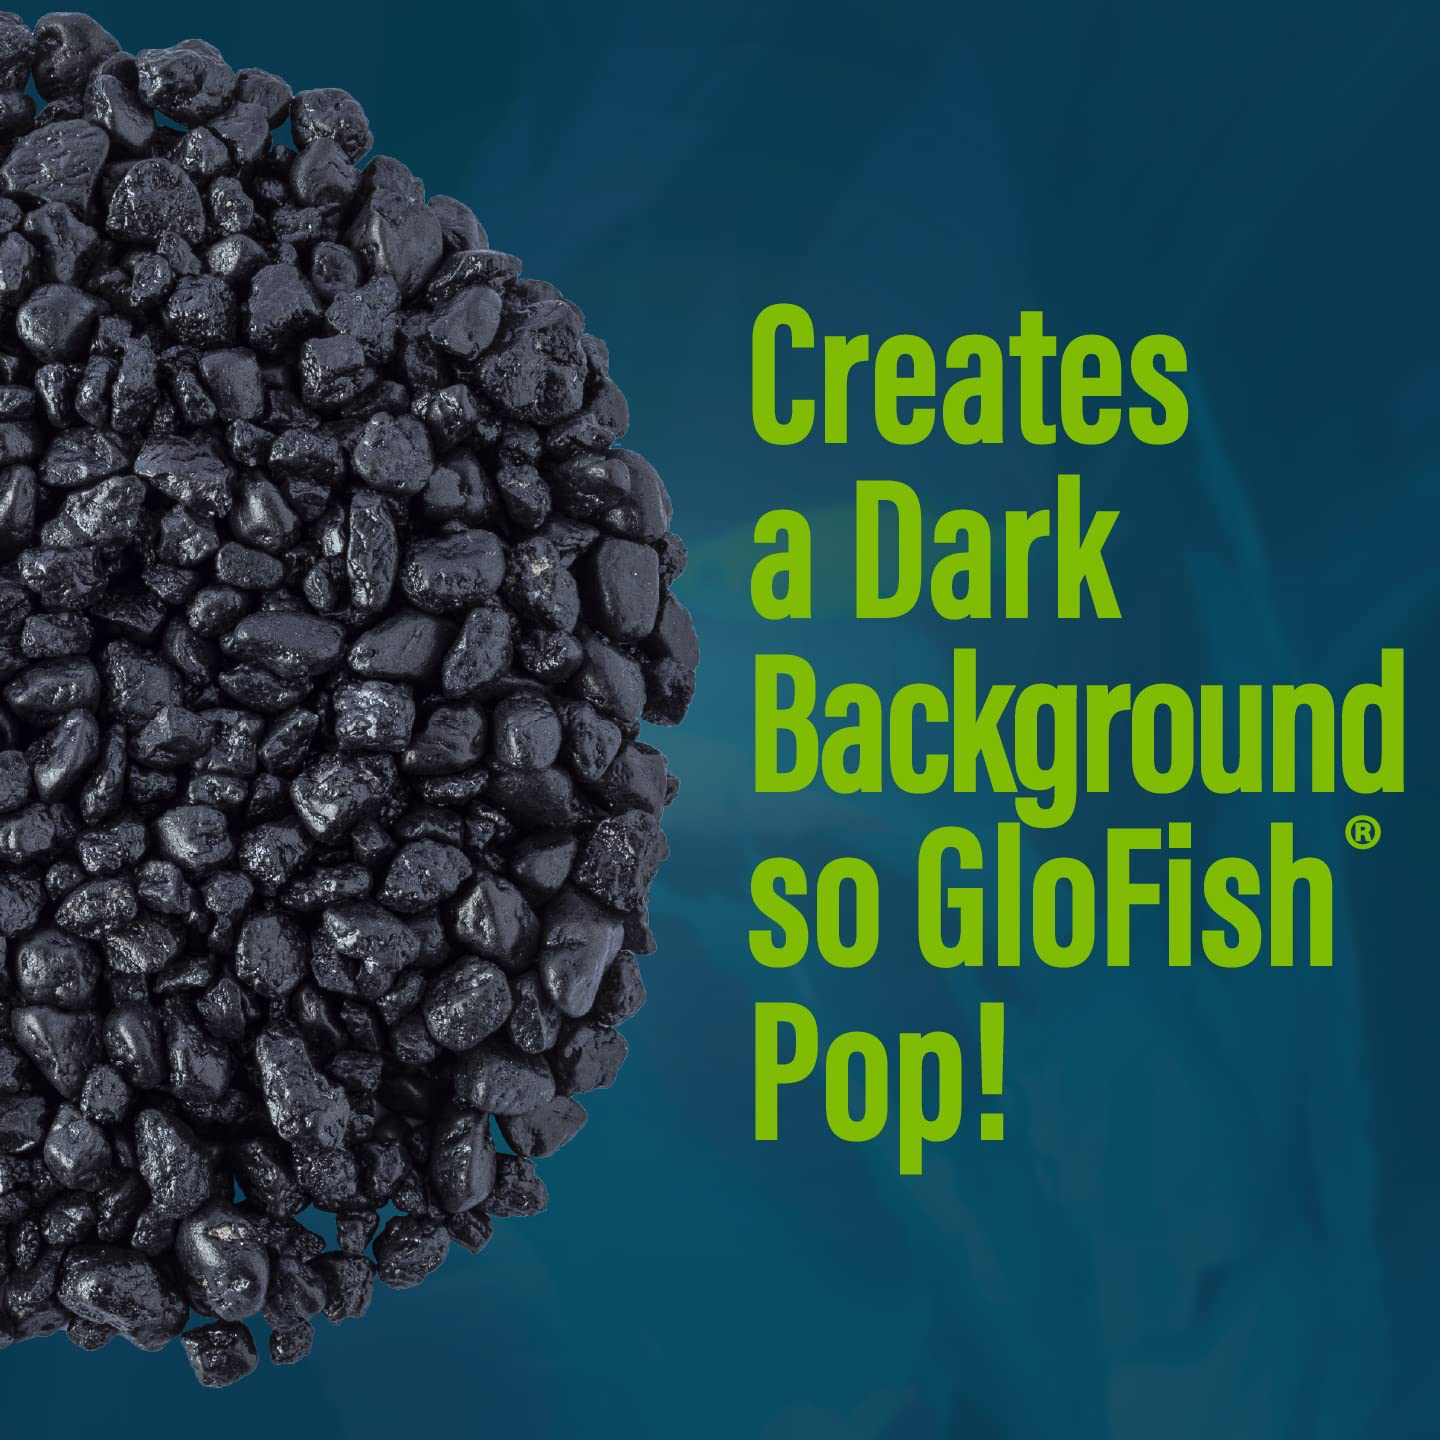 Glofish Aquarium Gravel, Fluorescent Colors, Complements Glofish Tanks, 5-Pound Bag